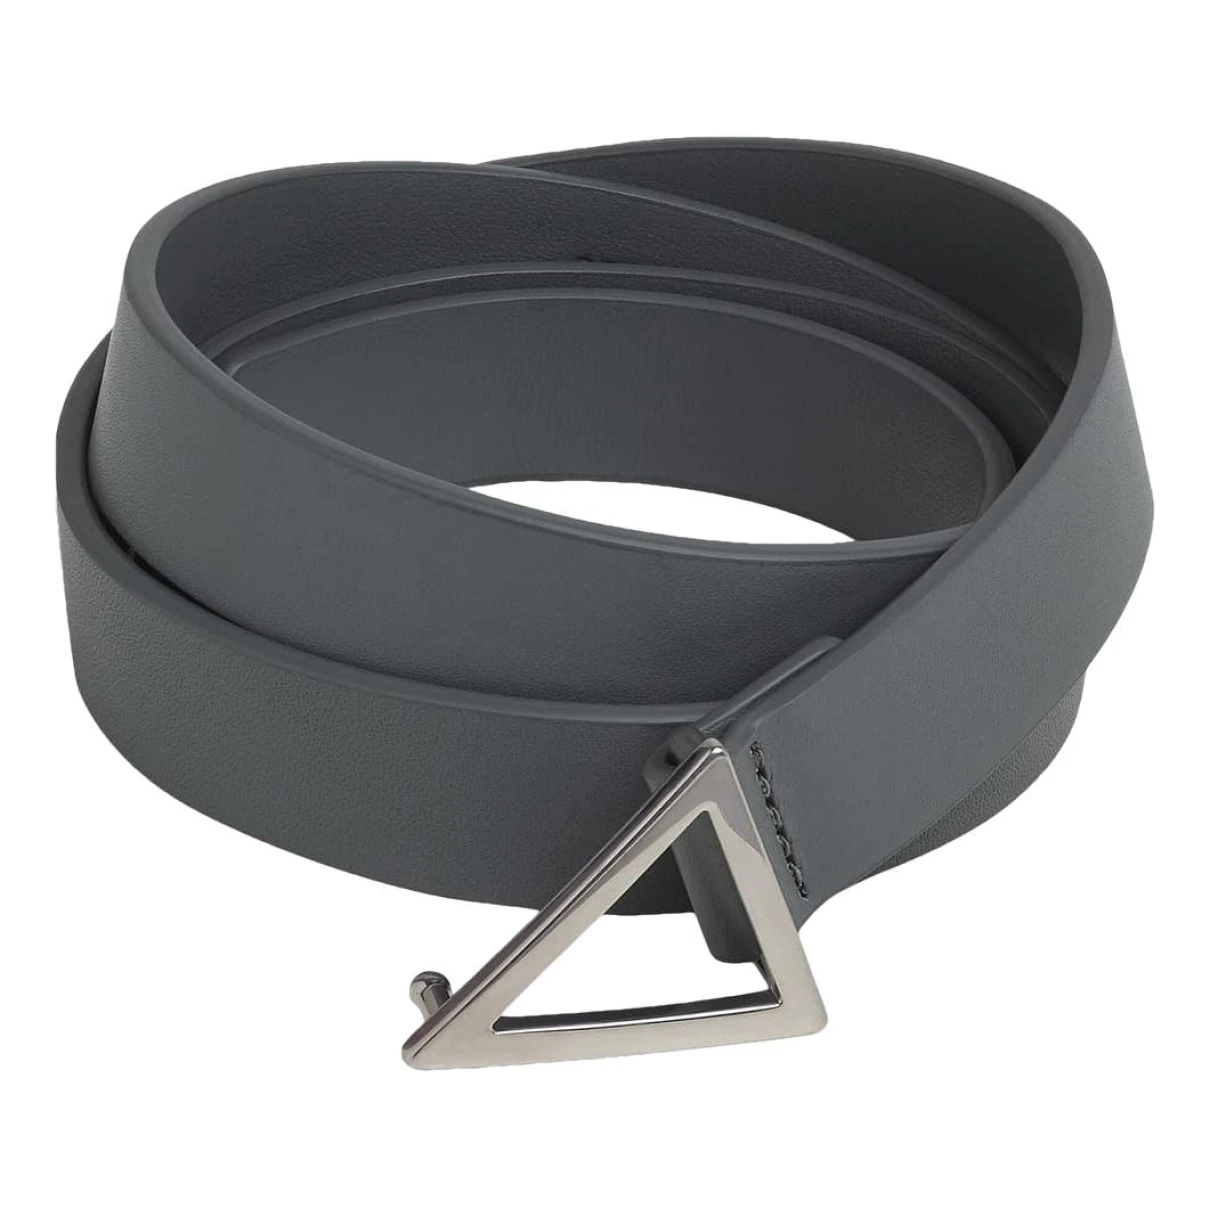 accessories Bottega Veneta belts Triangle for Female Leather 85 cm. Used condition